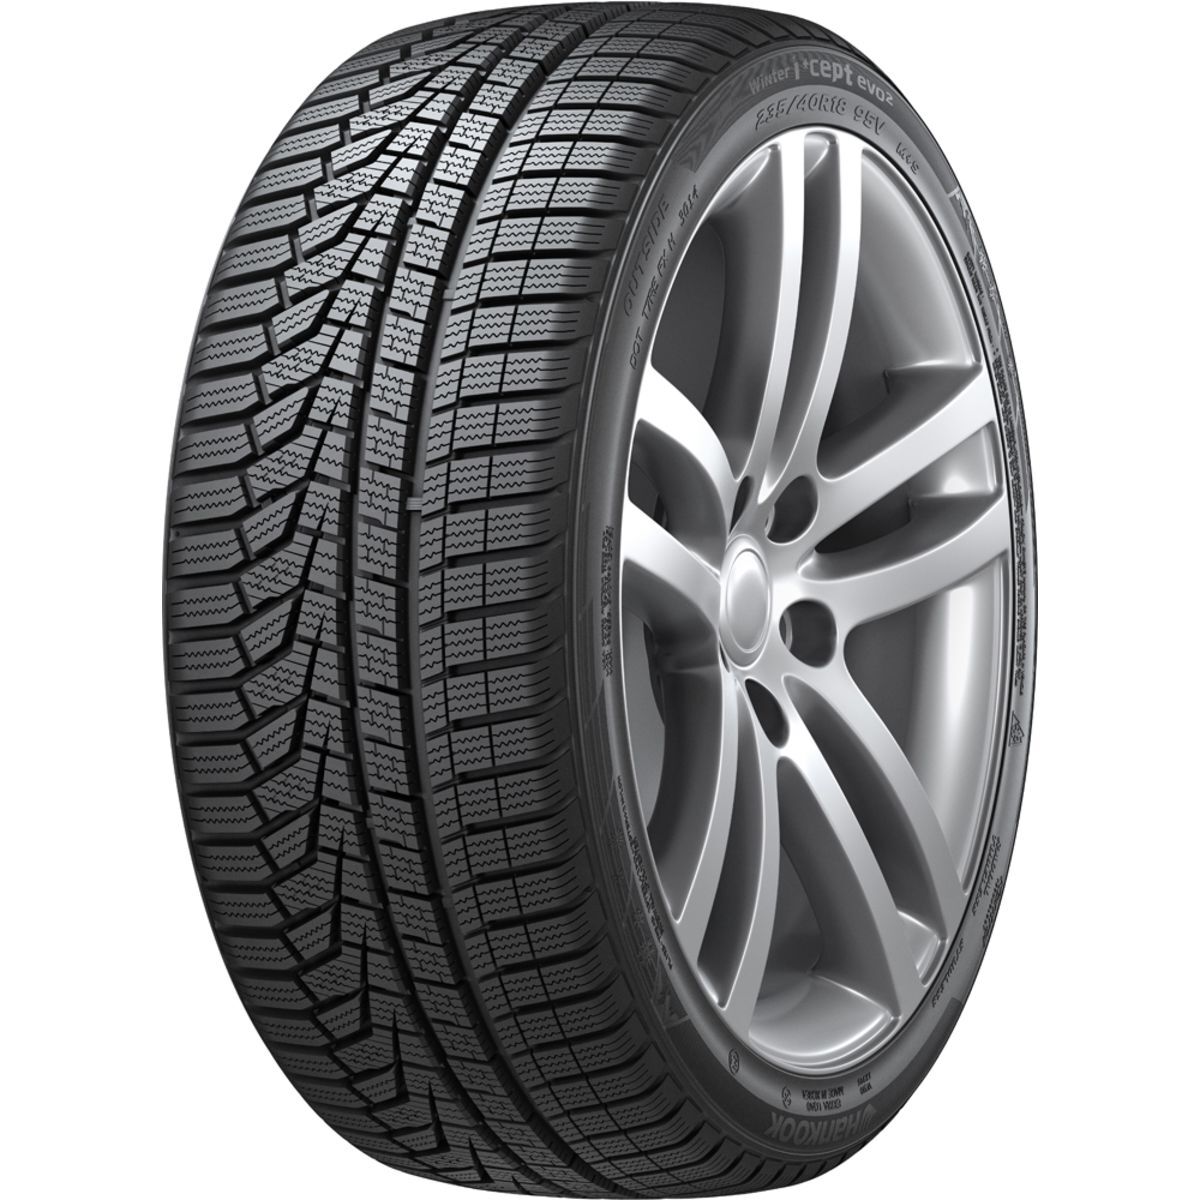 Neumáticos de invierno HANKOOK Winter i*cept evo2 W320B 205/55R16 91V